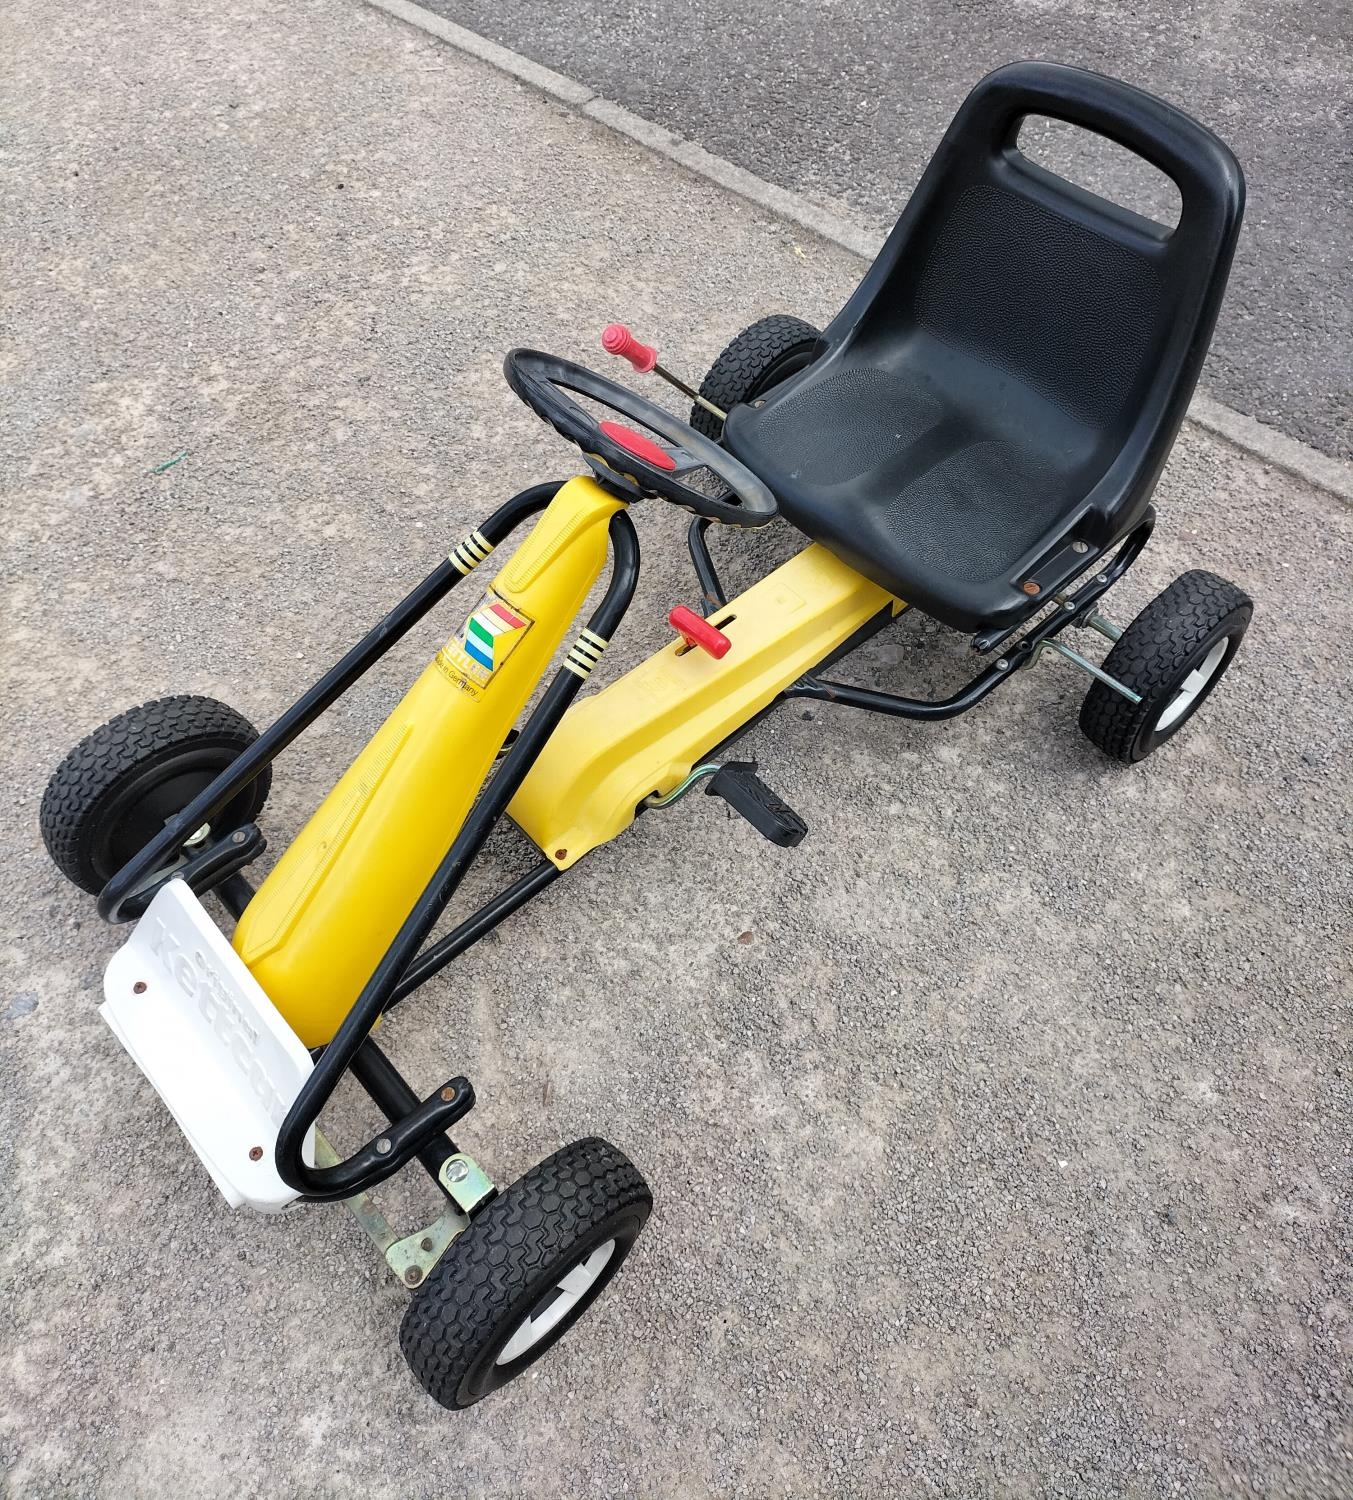 Kettcar Germany, yellow pedal gokart